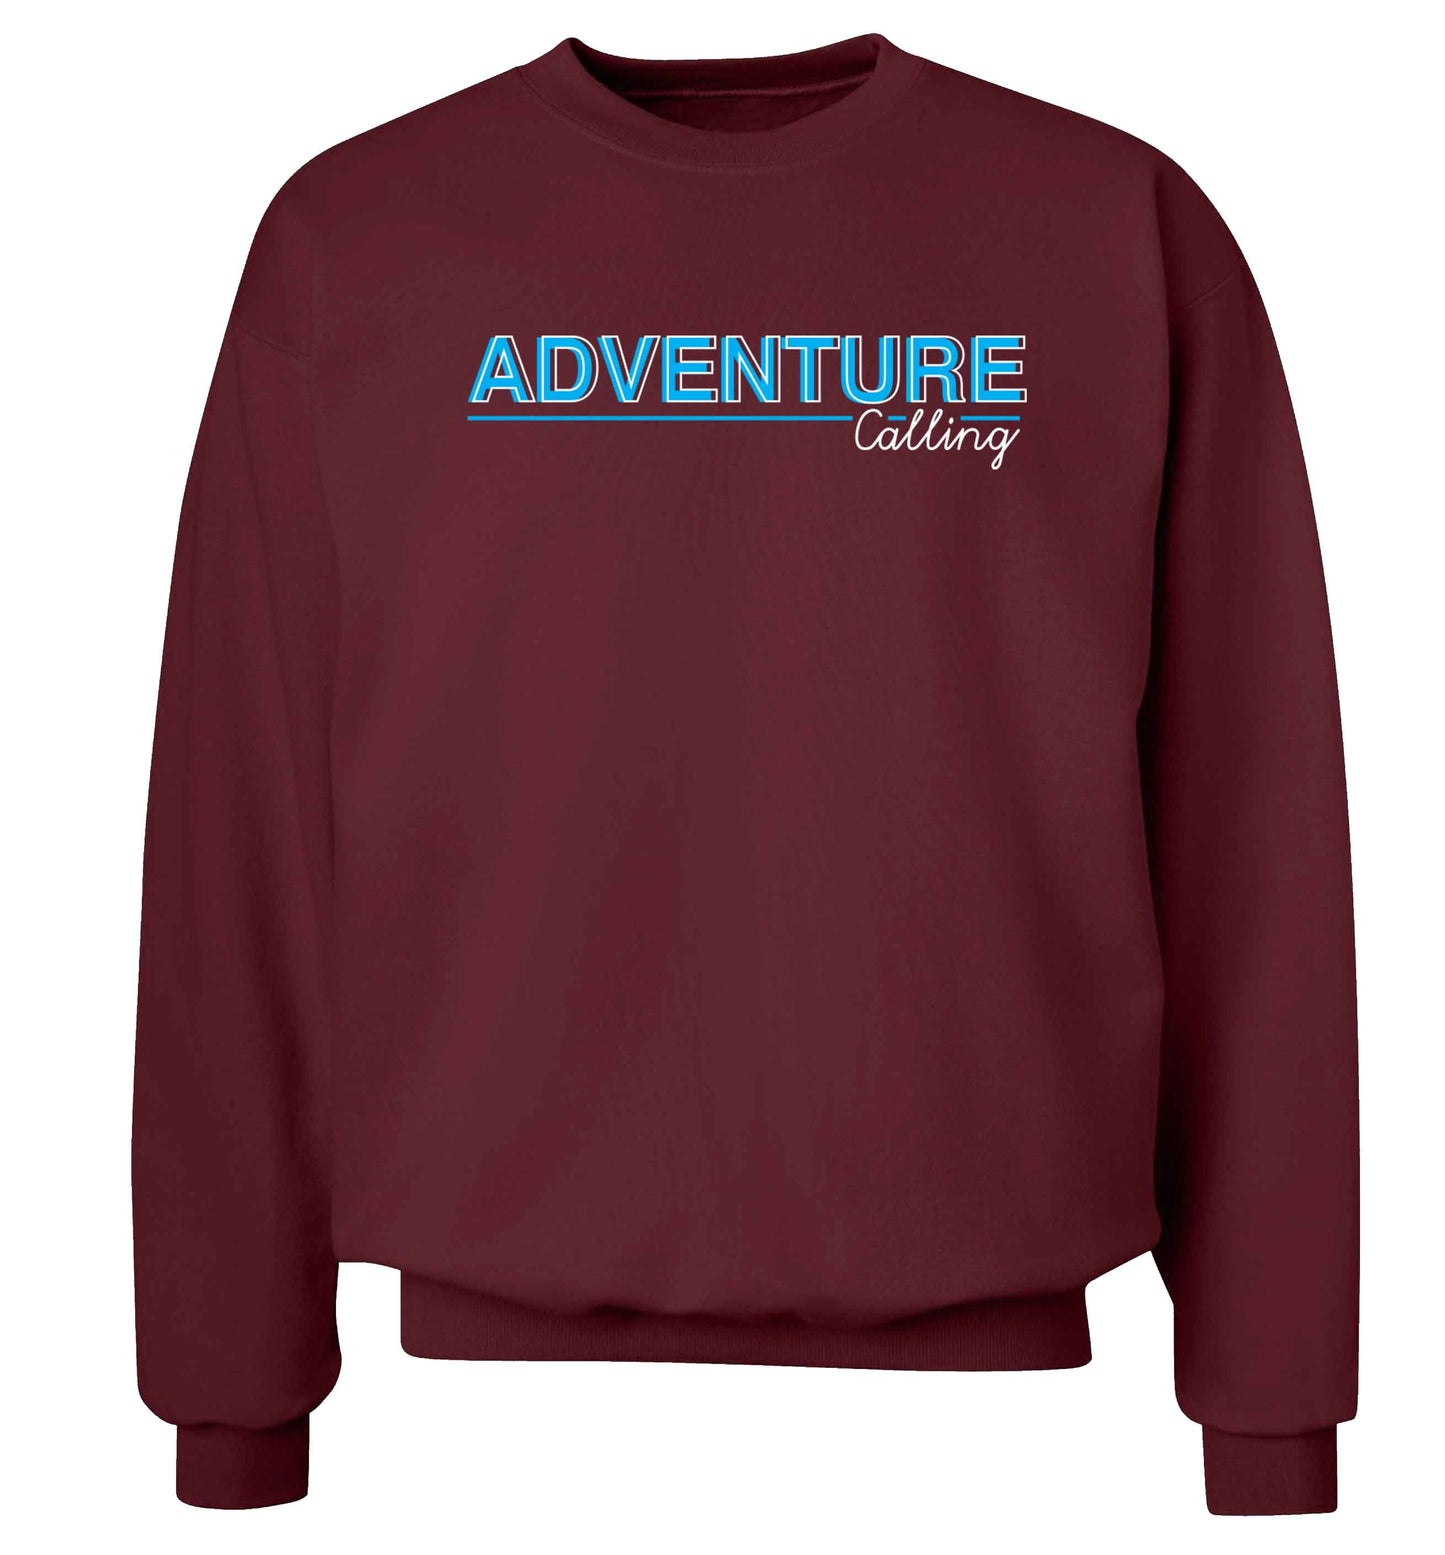 Adventure calling Adult's unisex maroon Sweater 2XL